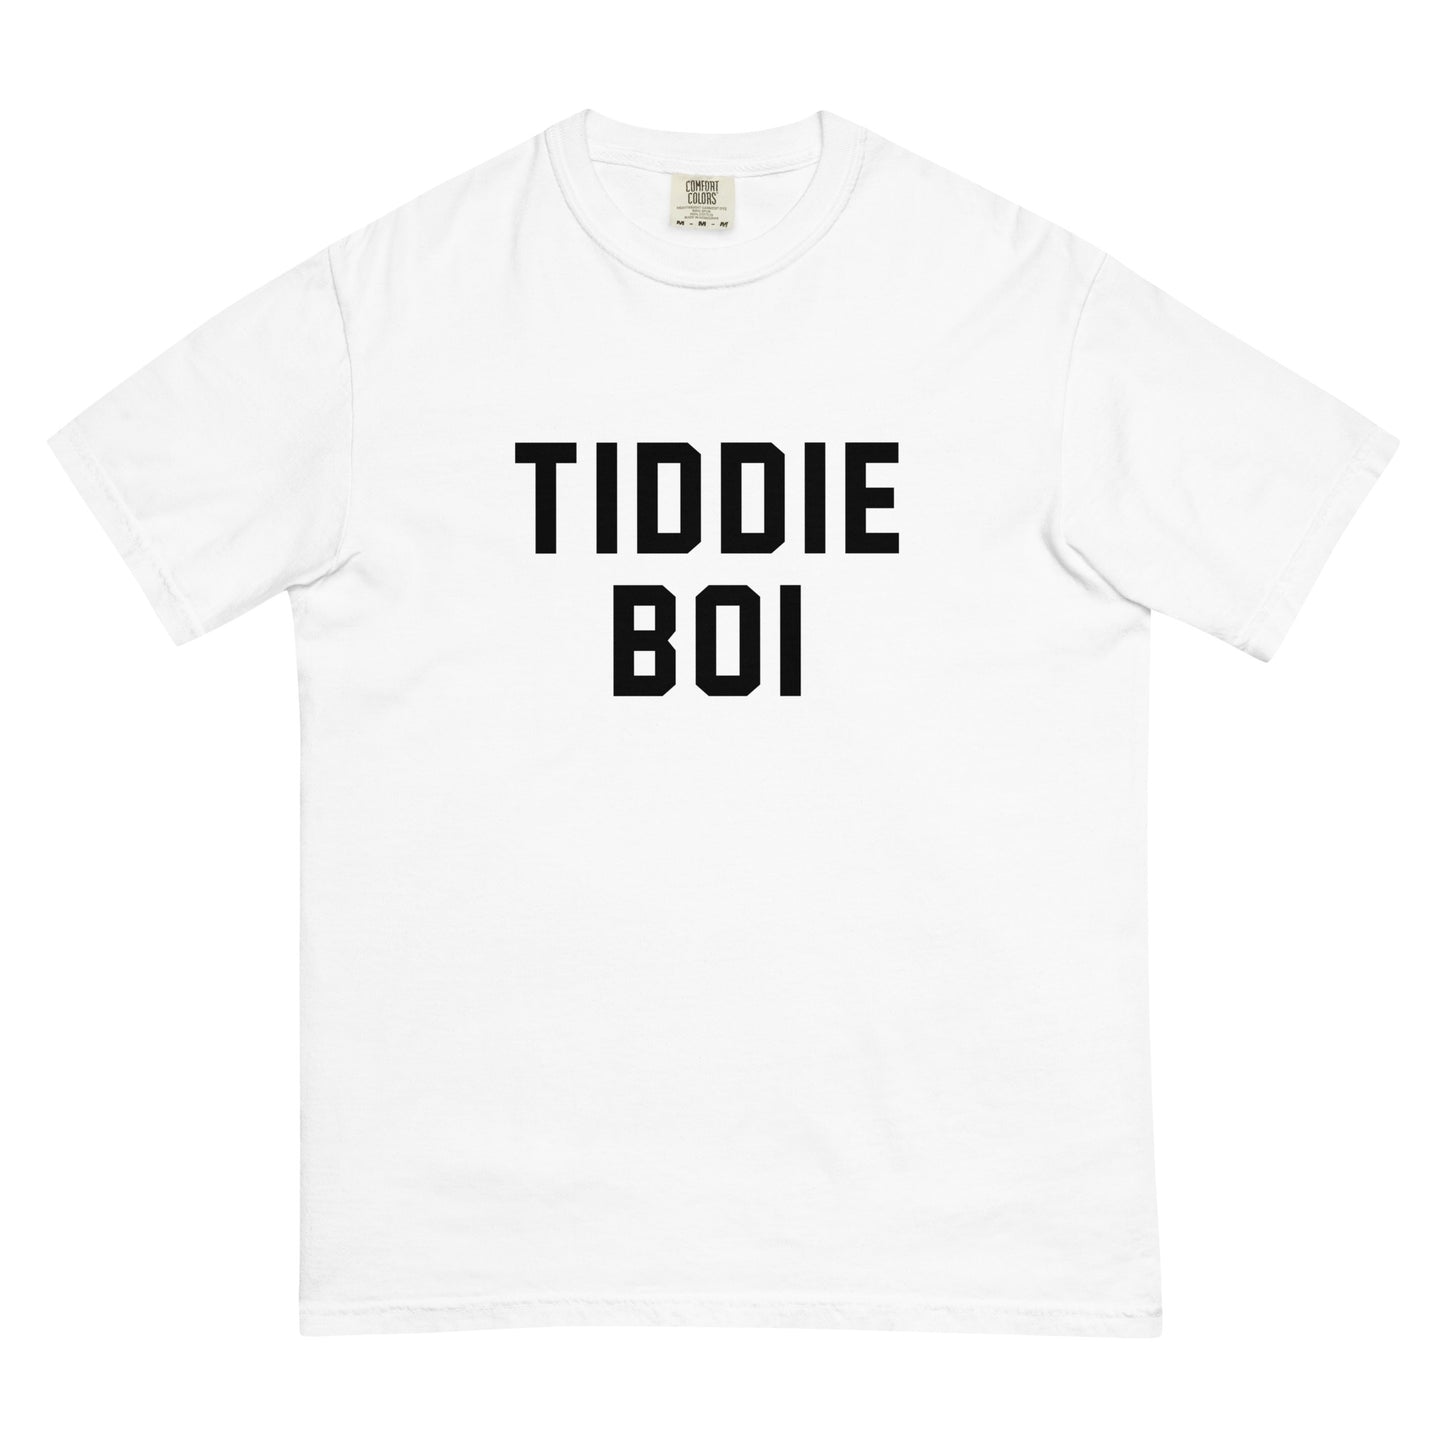 TIDDIE BOI